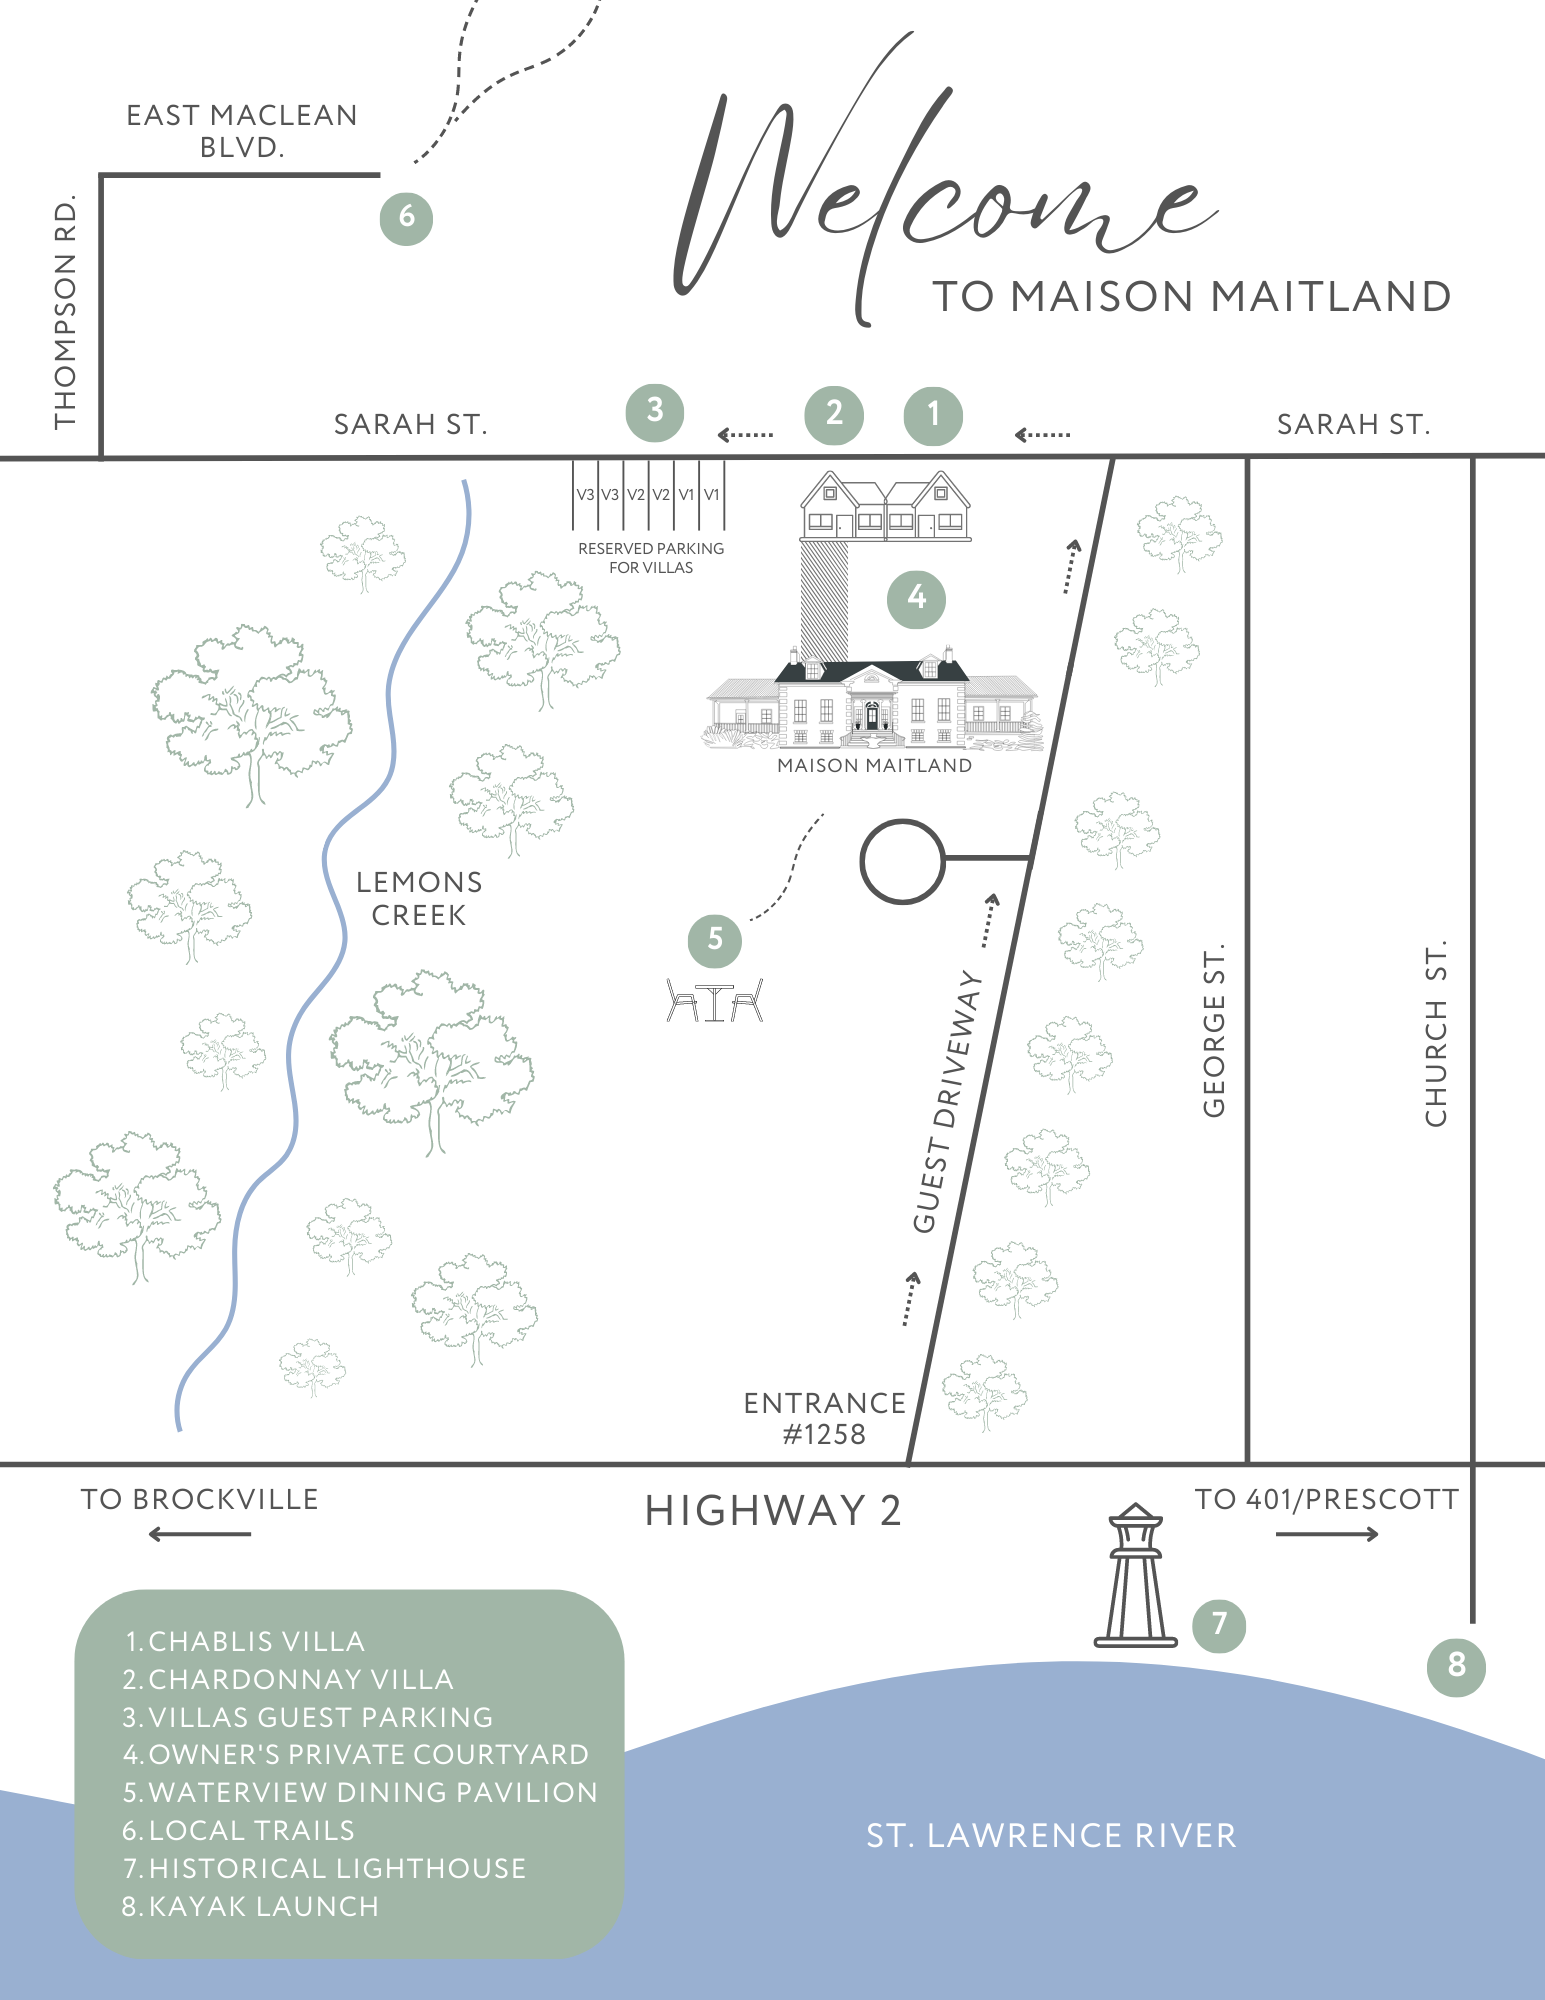 Maison Maitland Map View